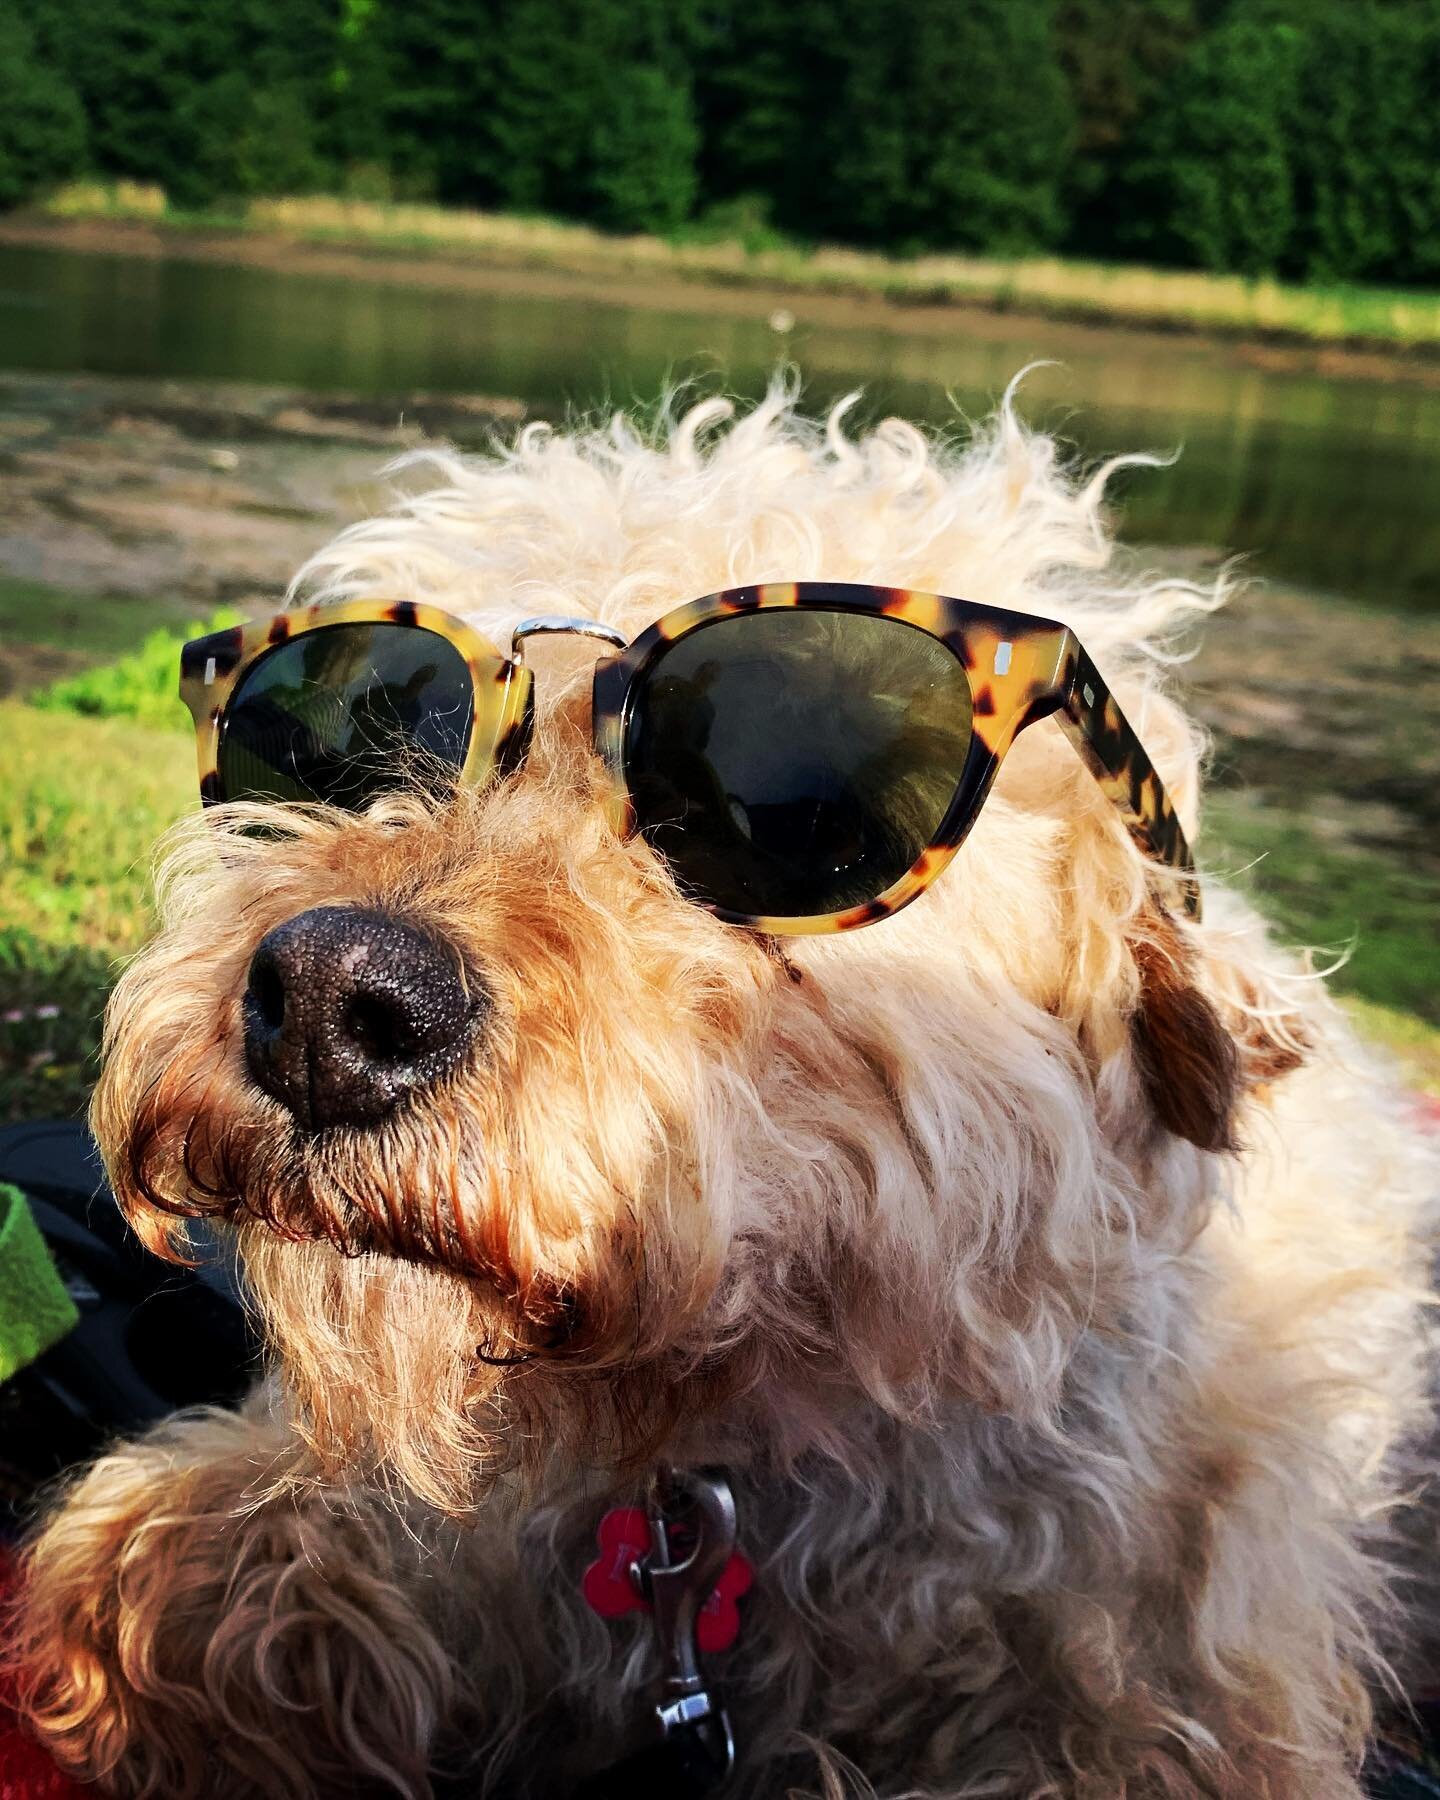 Staying cool in this weather 🕶 #cutkerandgross #sunglasses #dogsofinstagram #riverdeben #woodbridgeuk #river #optics #independentbusiness #opticians